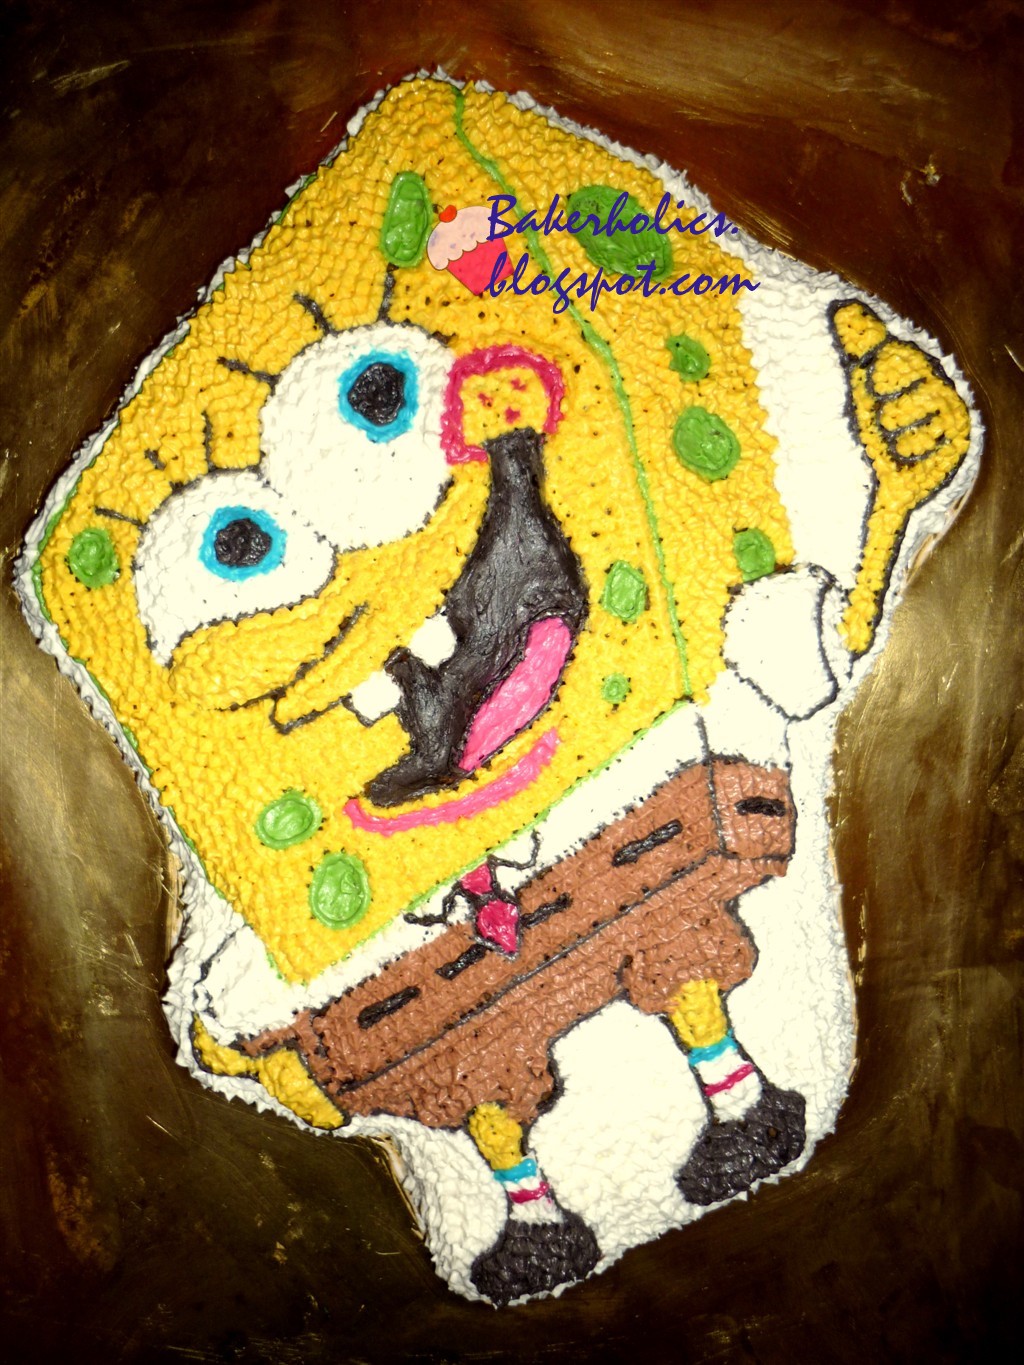 All About Bakery Supplies: 3D SpongeBob SquarePants Cake